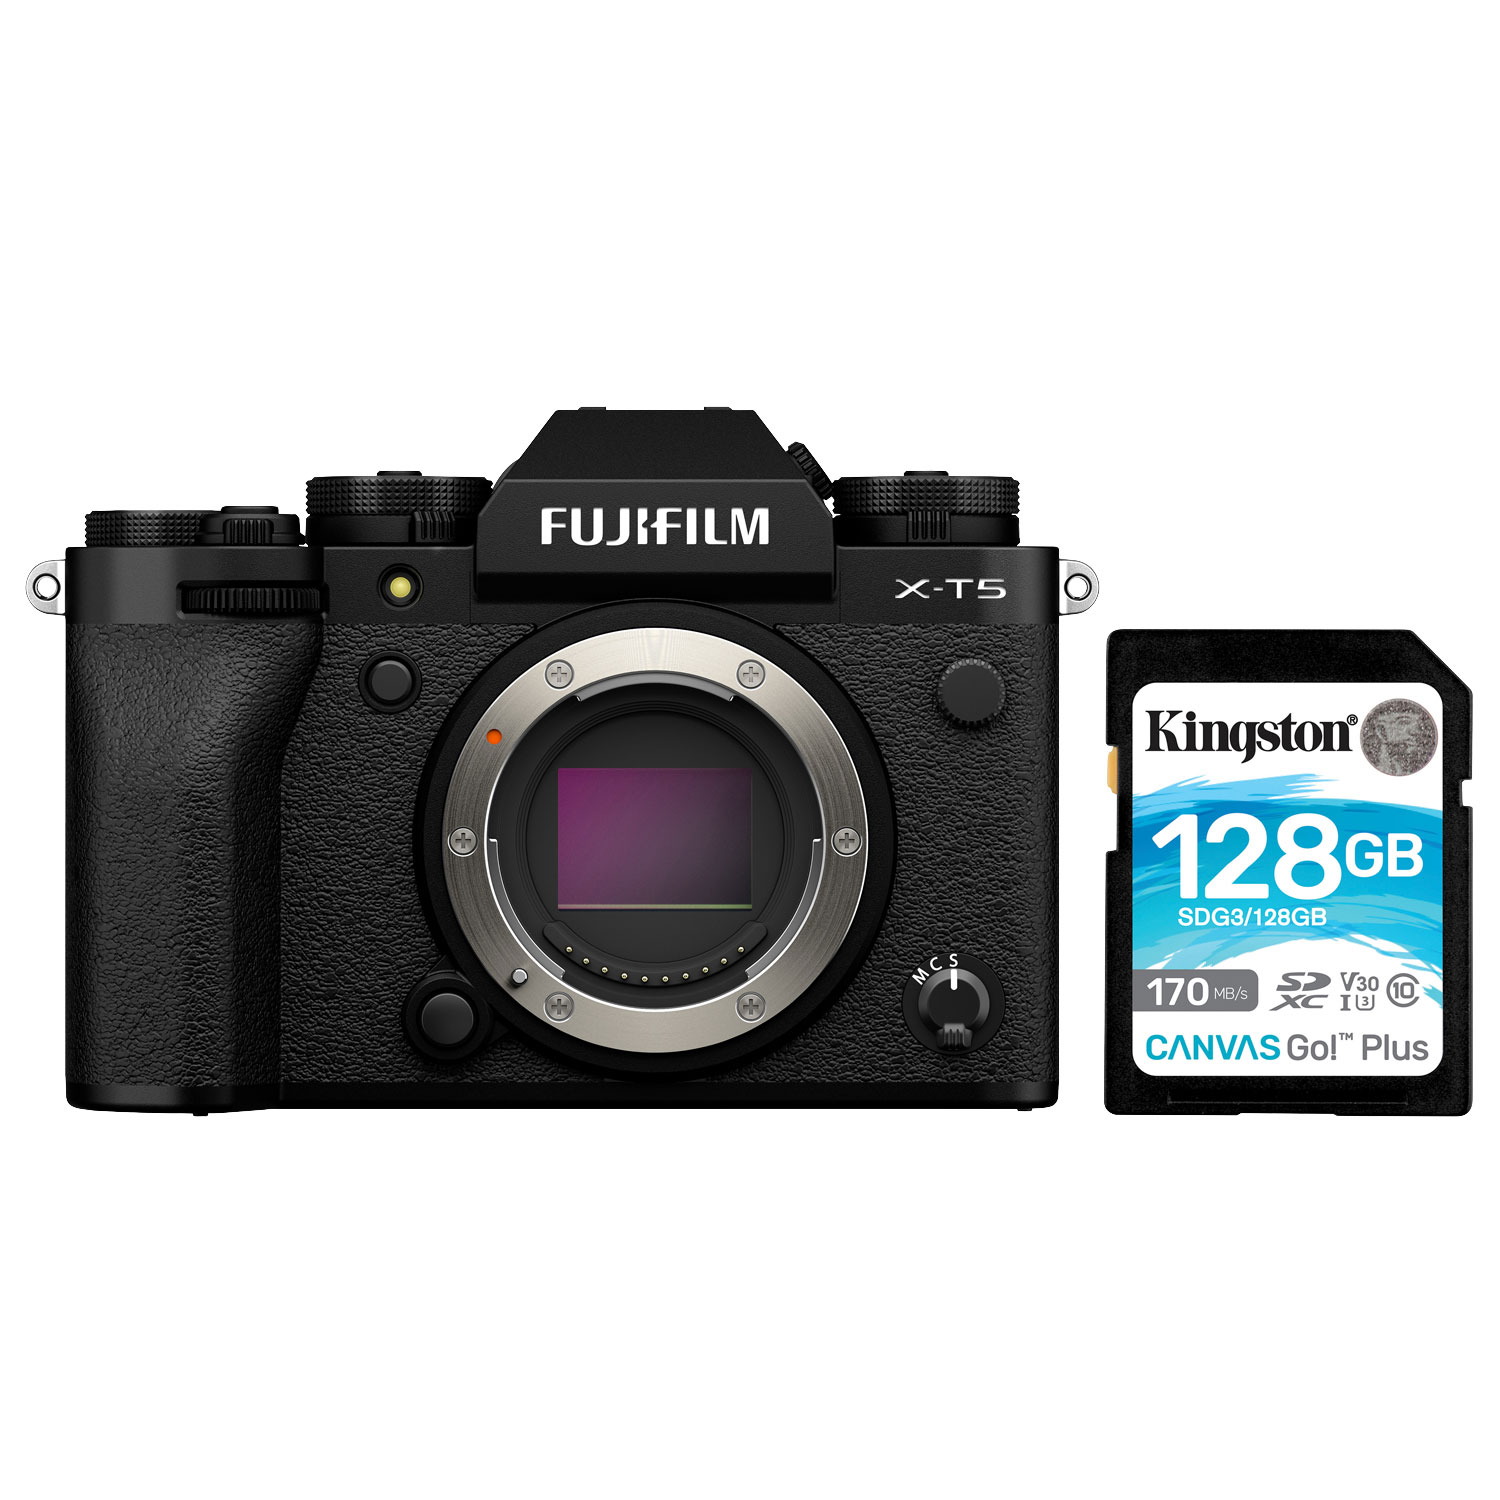 Fujifilm X-T5 Mirrorless Camera (Body Only) with 128GB Memory Card - Black